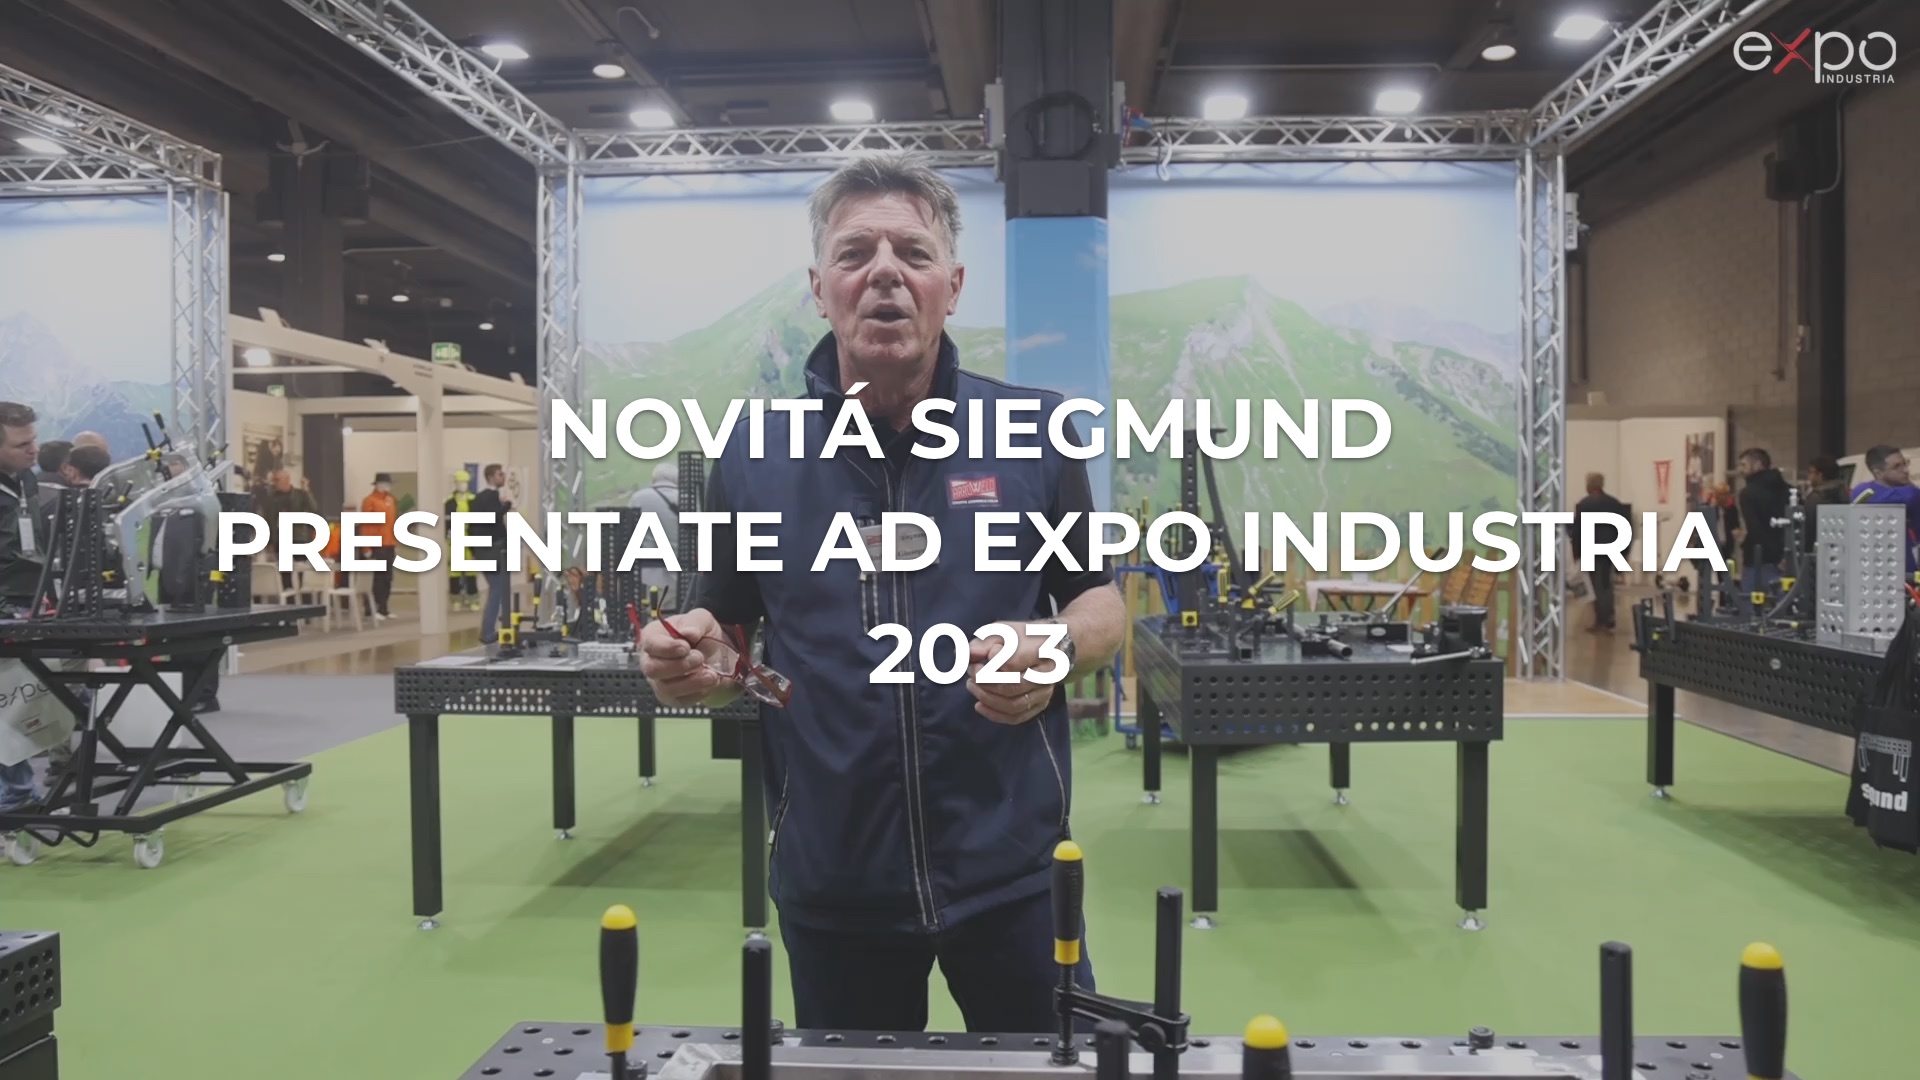 Tavoli Siegmund: Novità 2023 presentate a Expo Industria